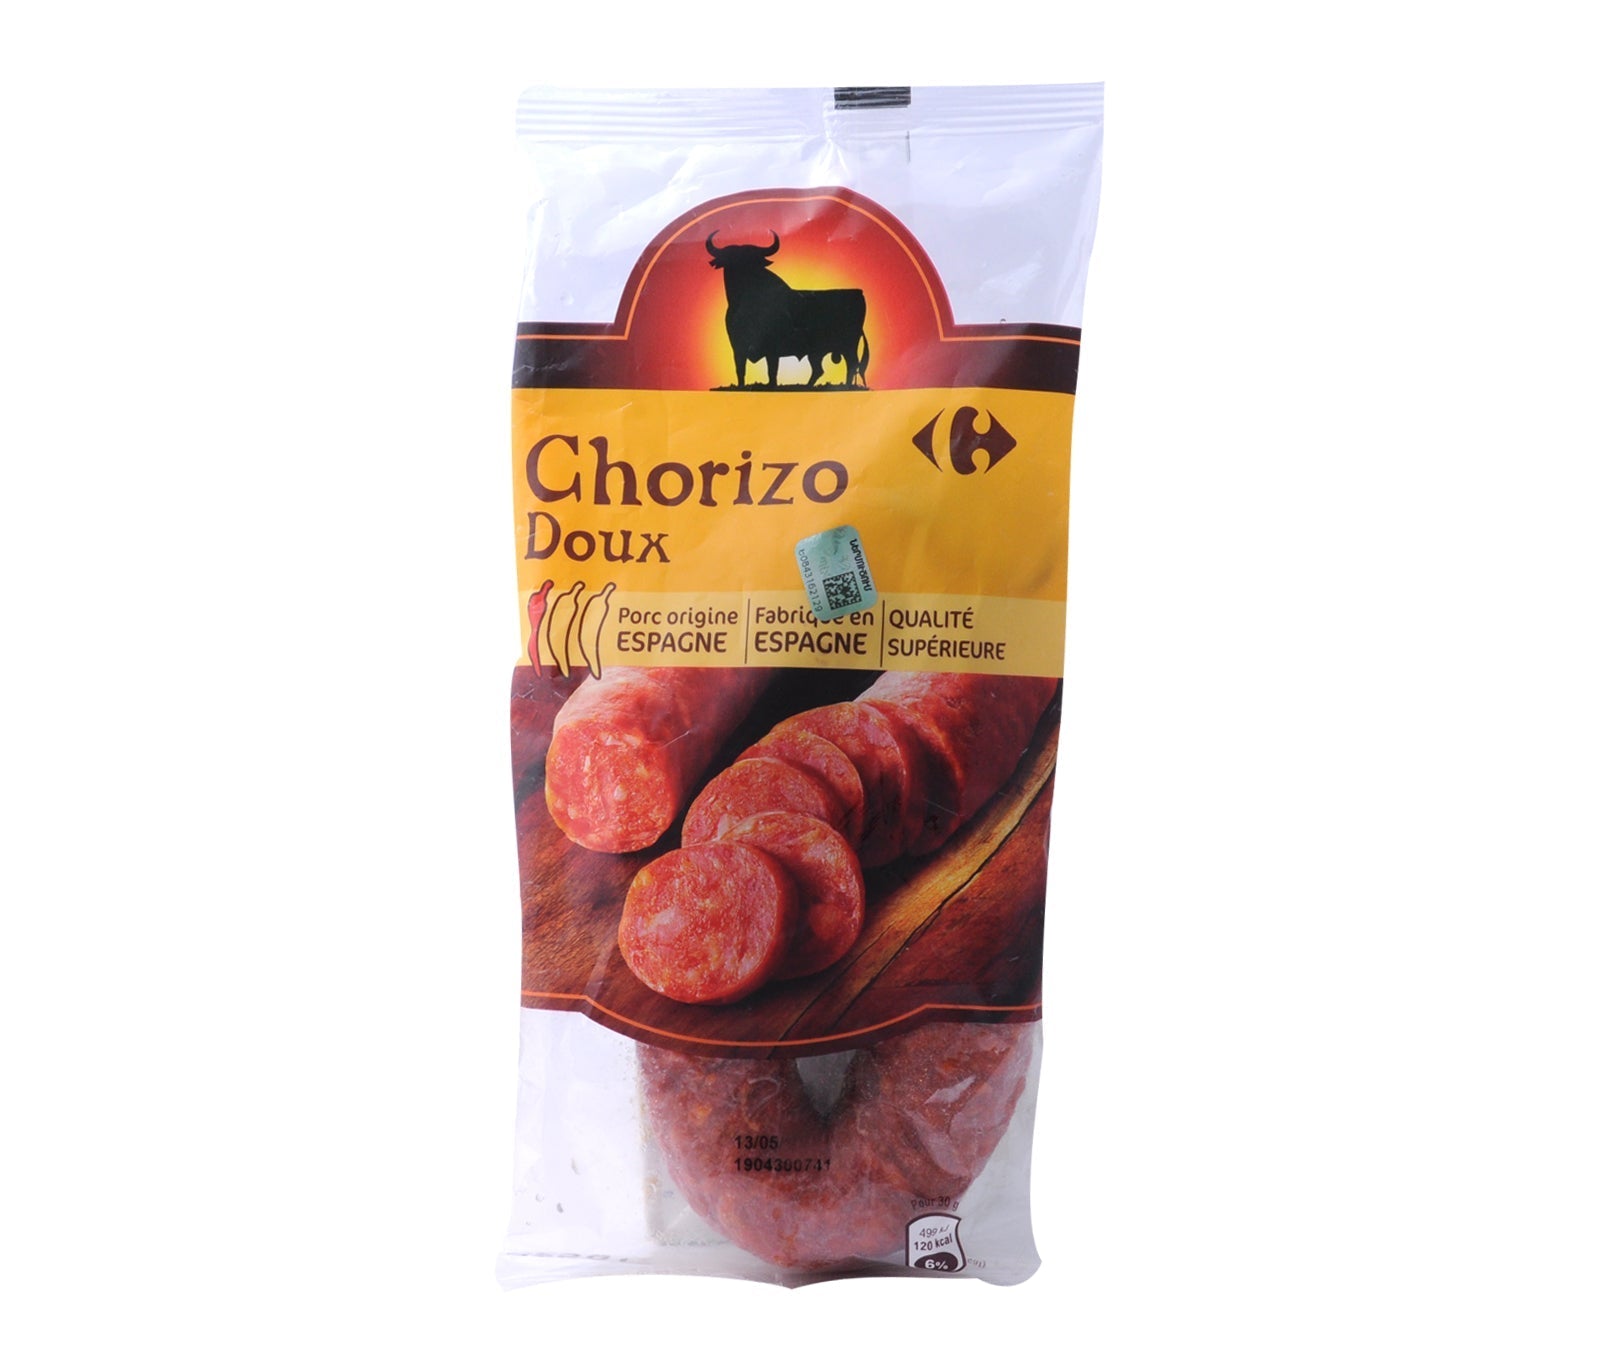 stm>Chorizo, Carrefour, one